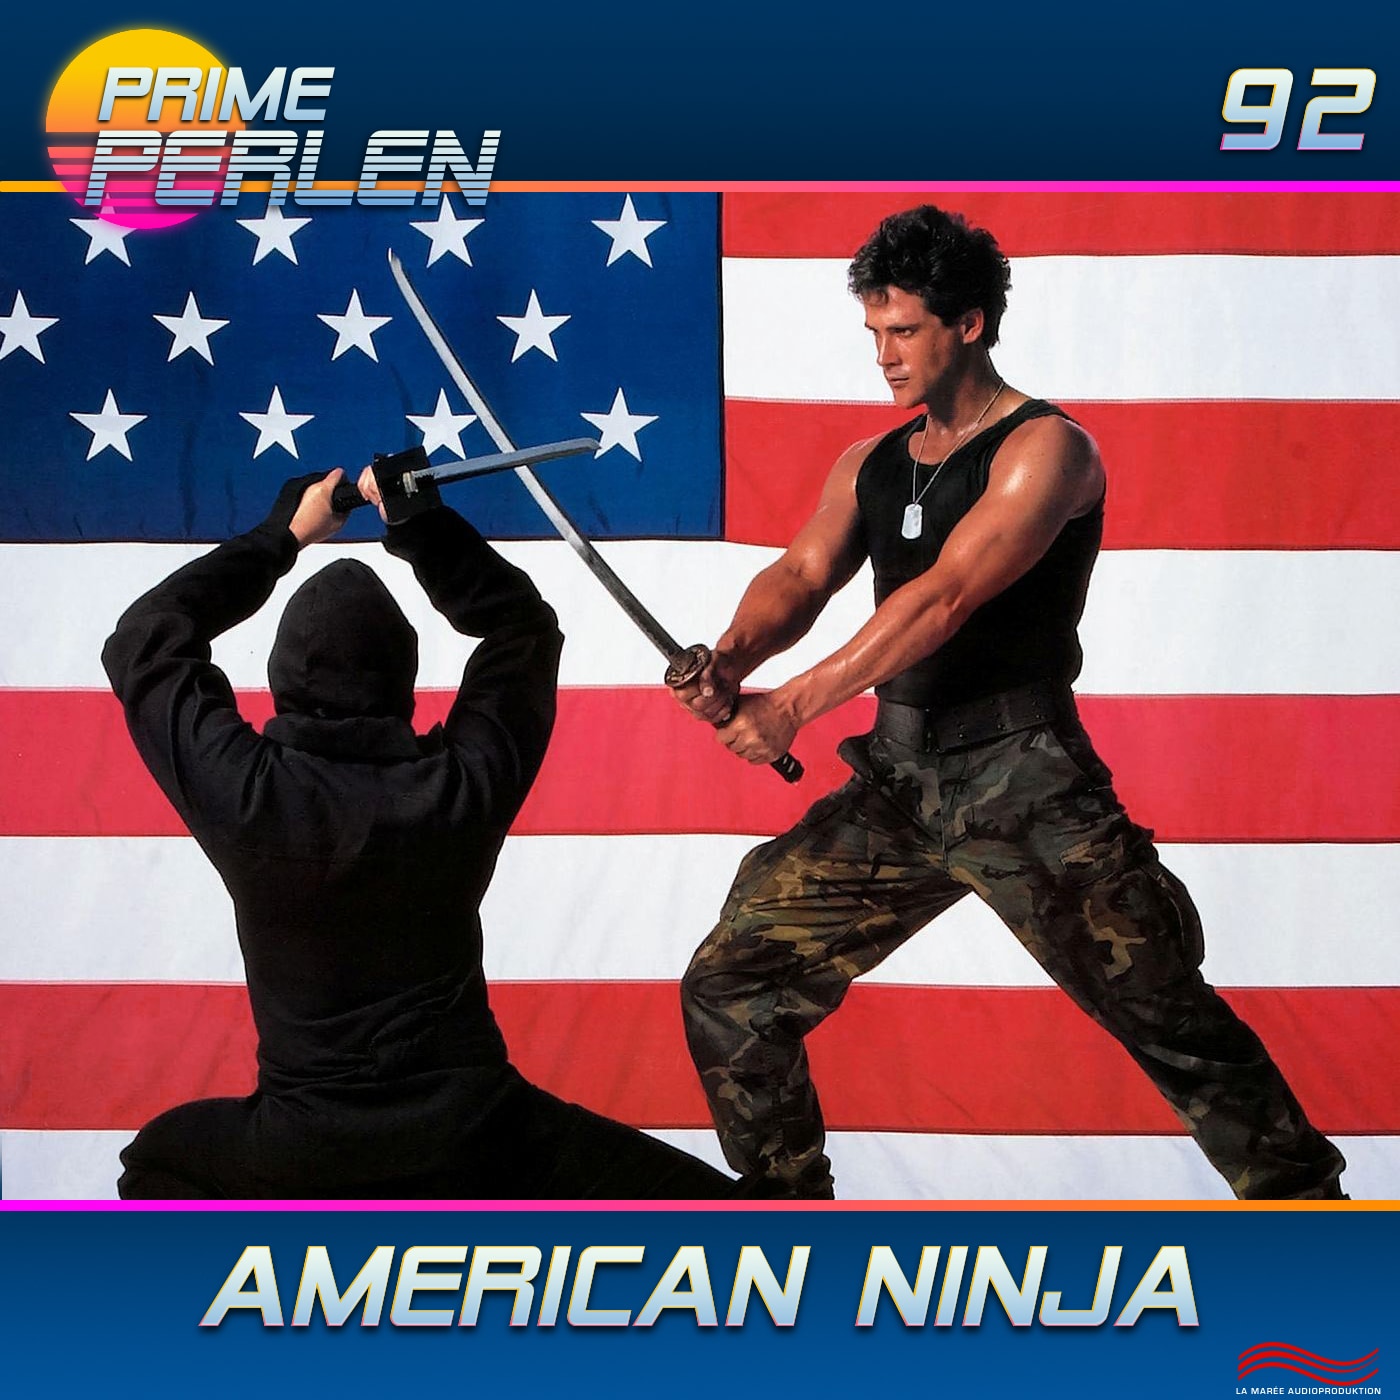 Prime Perlen #92 – American Ninja